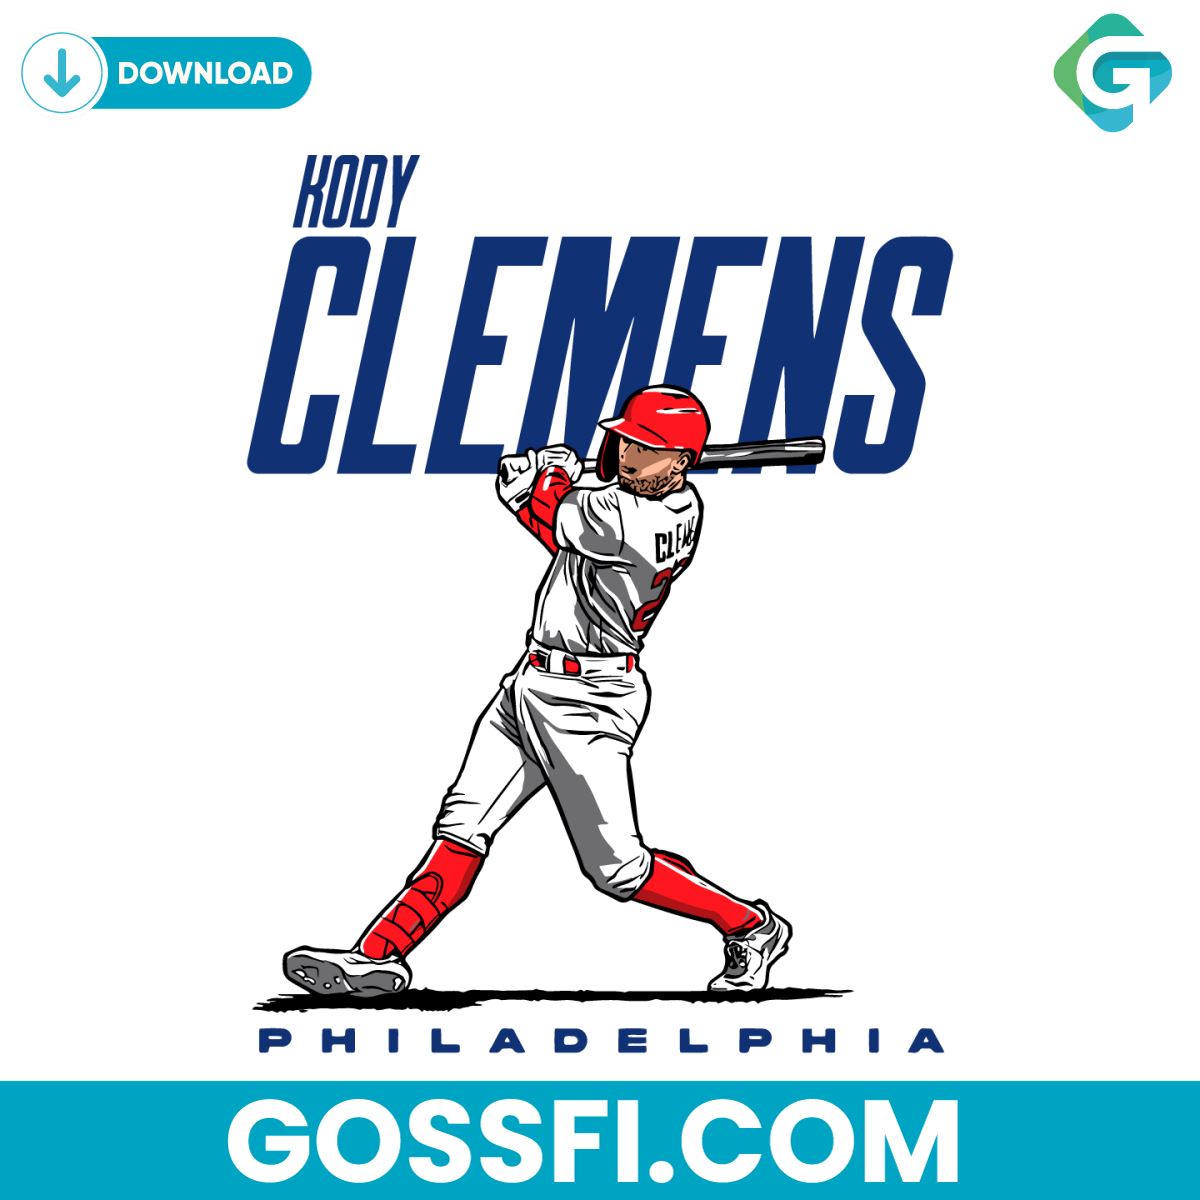 kody-clemens-23-player-philadelphia-baseball-mlb-svg-digital-download